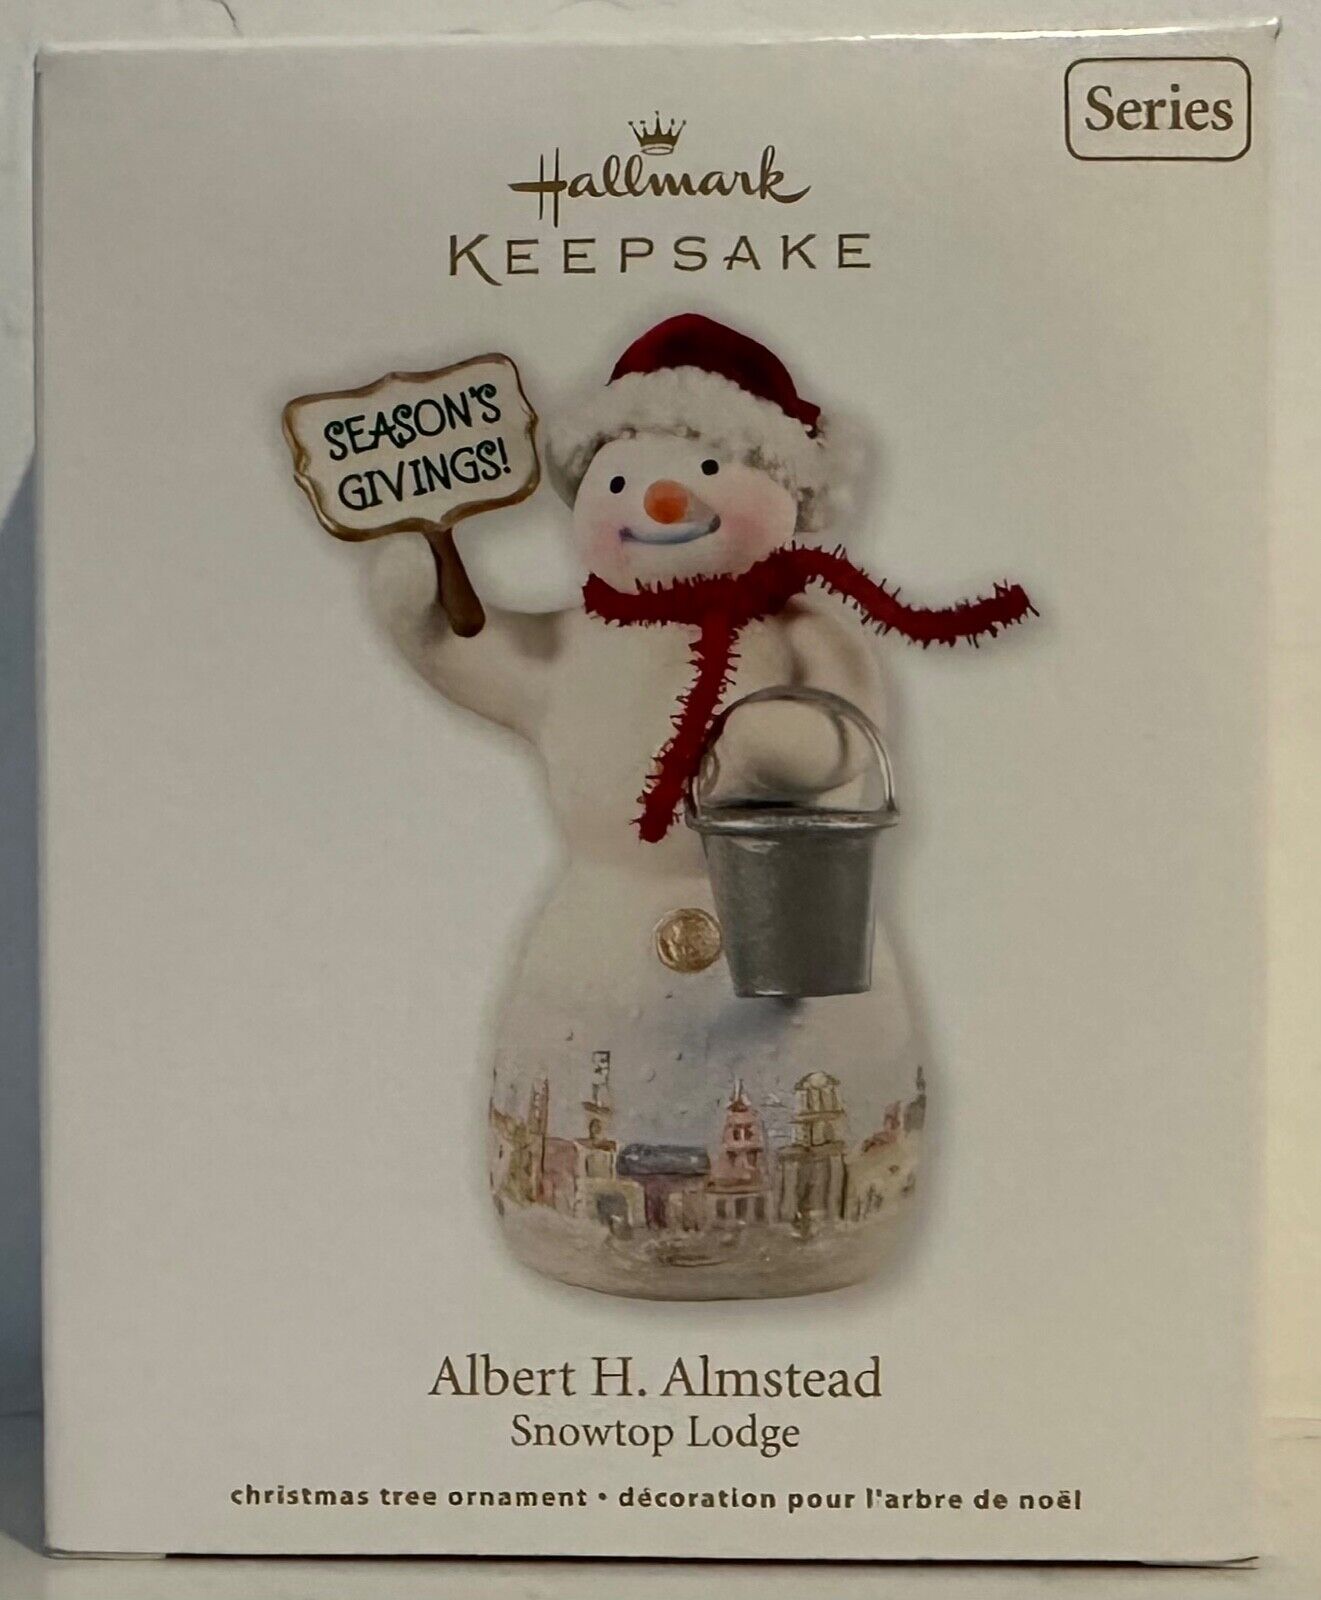 2012 Hallmark Keepsake Ornament Albert H. Almstead Snow top Lodge